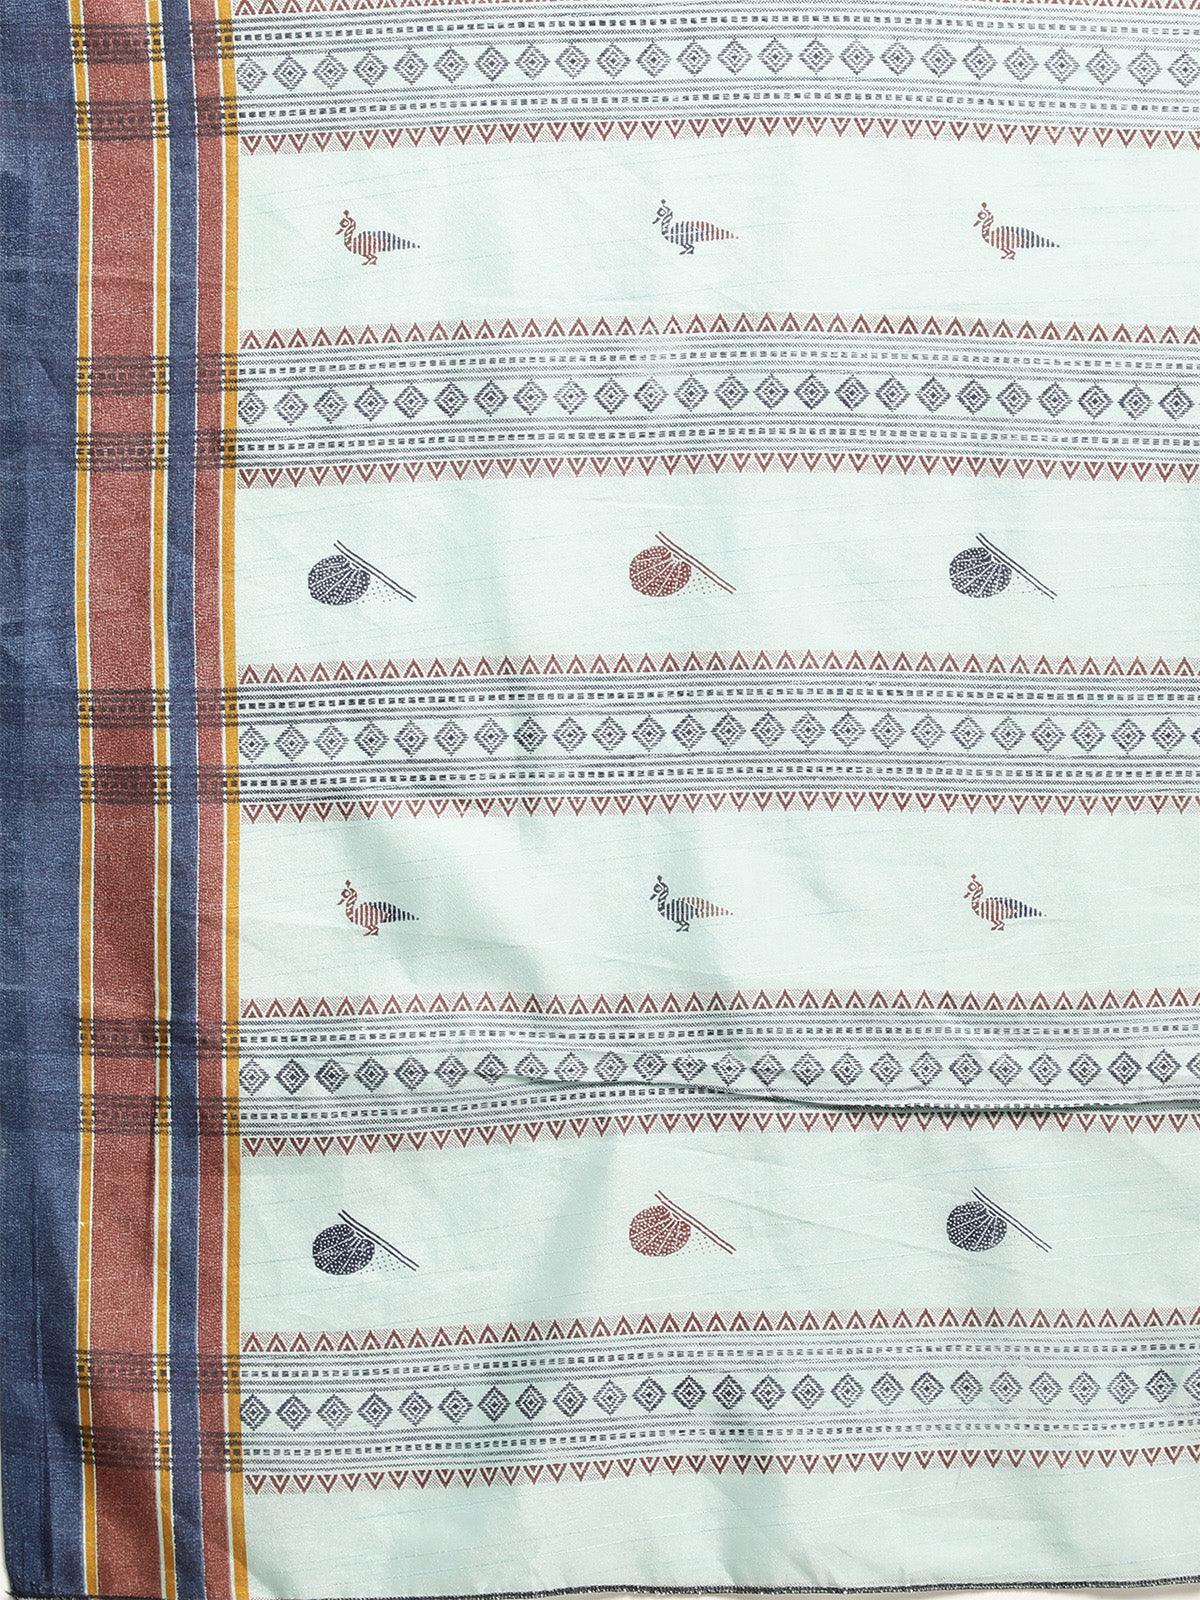 Bhagalpuri Silk Turquoise Printed Saree With Blouse Piece - Odette